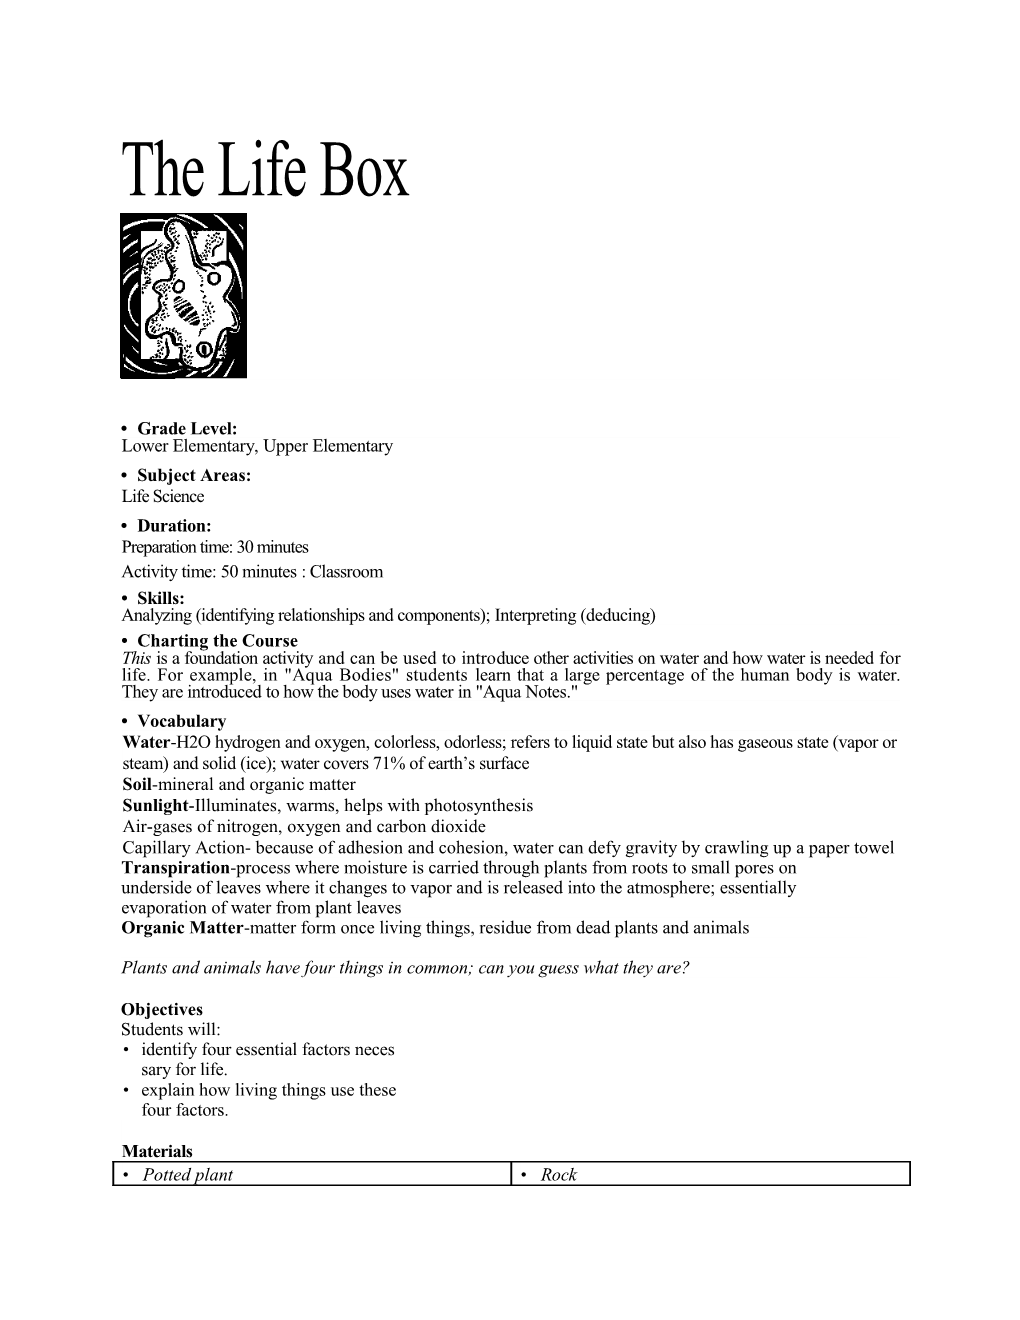 The Life Box